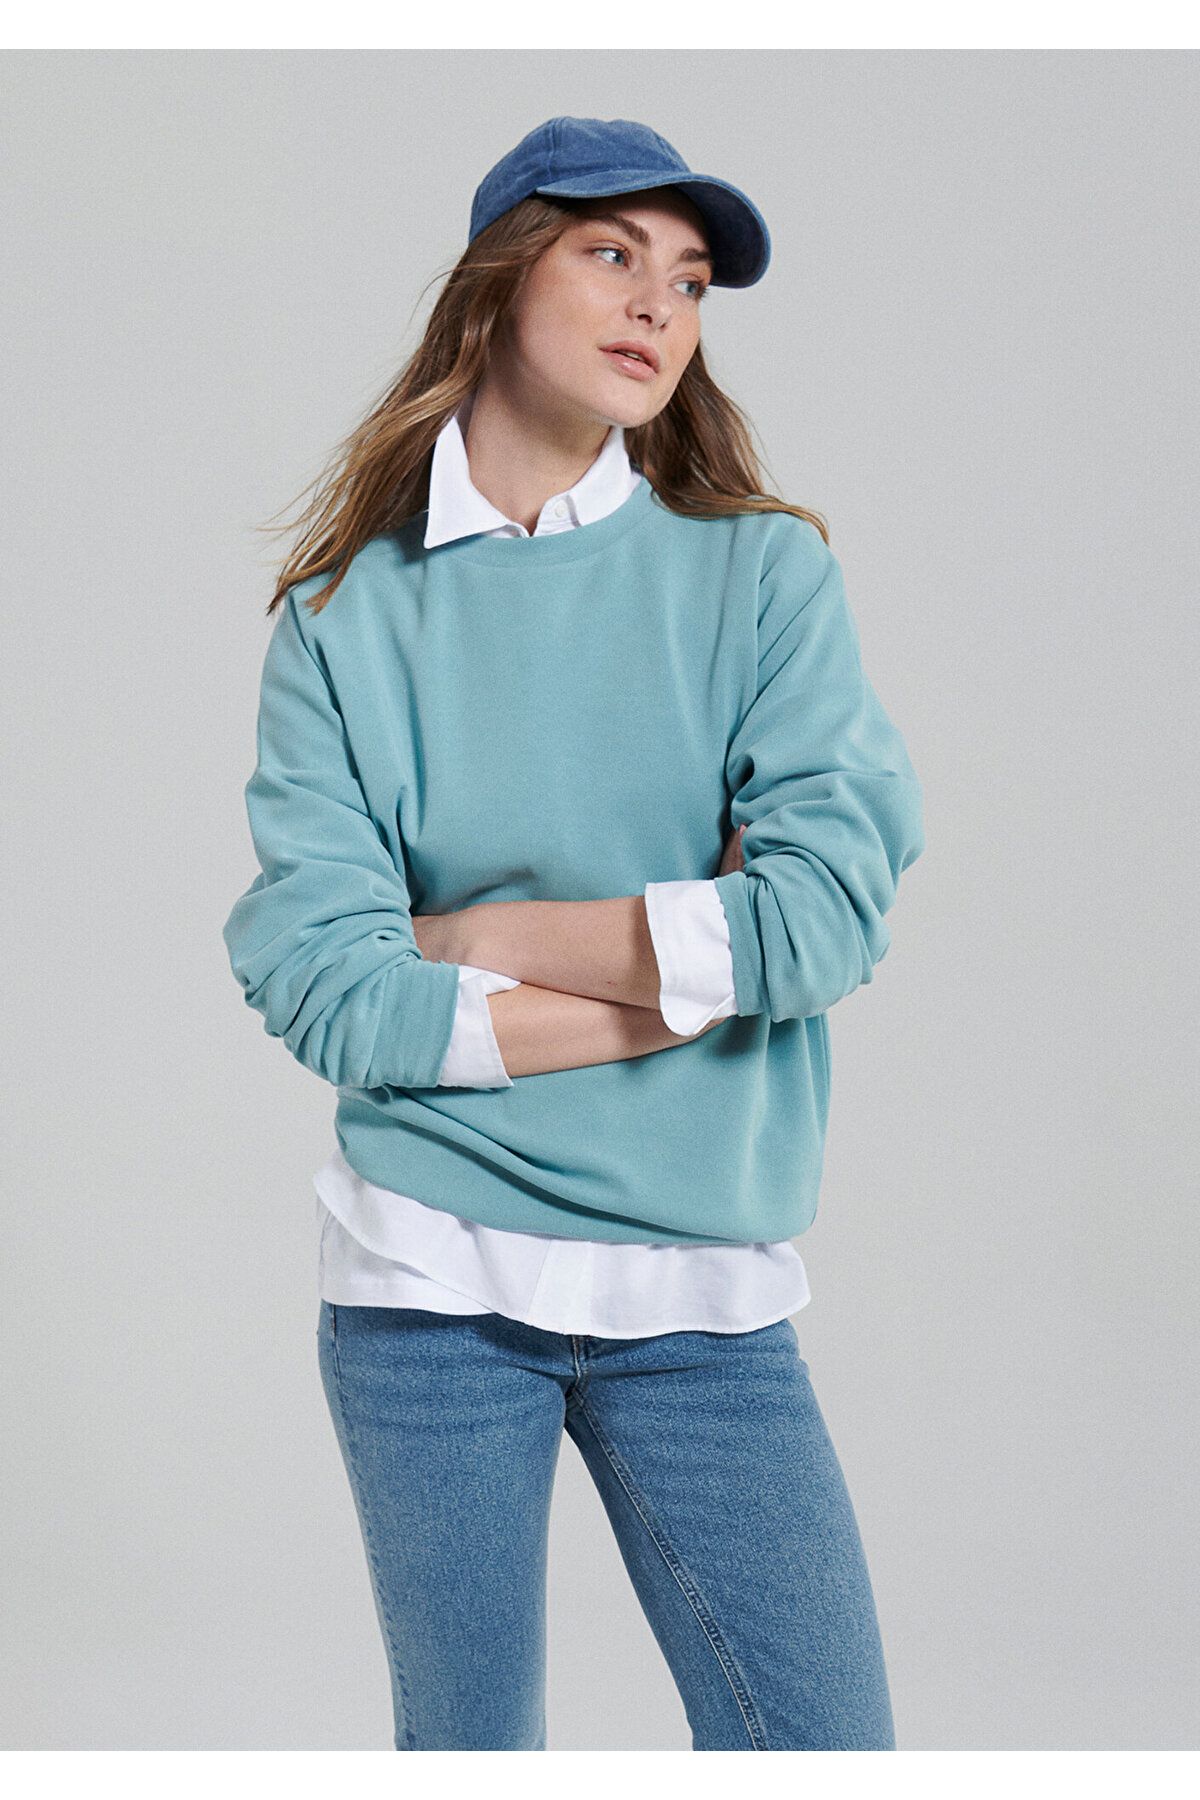 Mavi Lux Touch Mavi Modal Sweatshirt 168837-70844